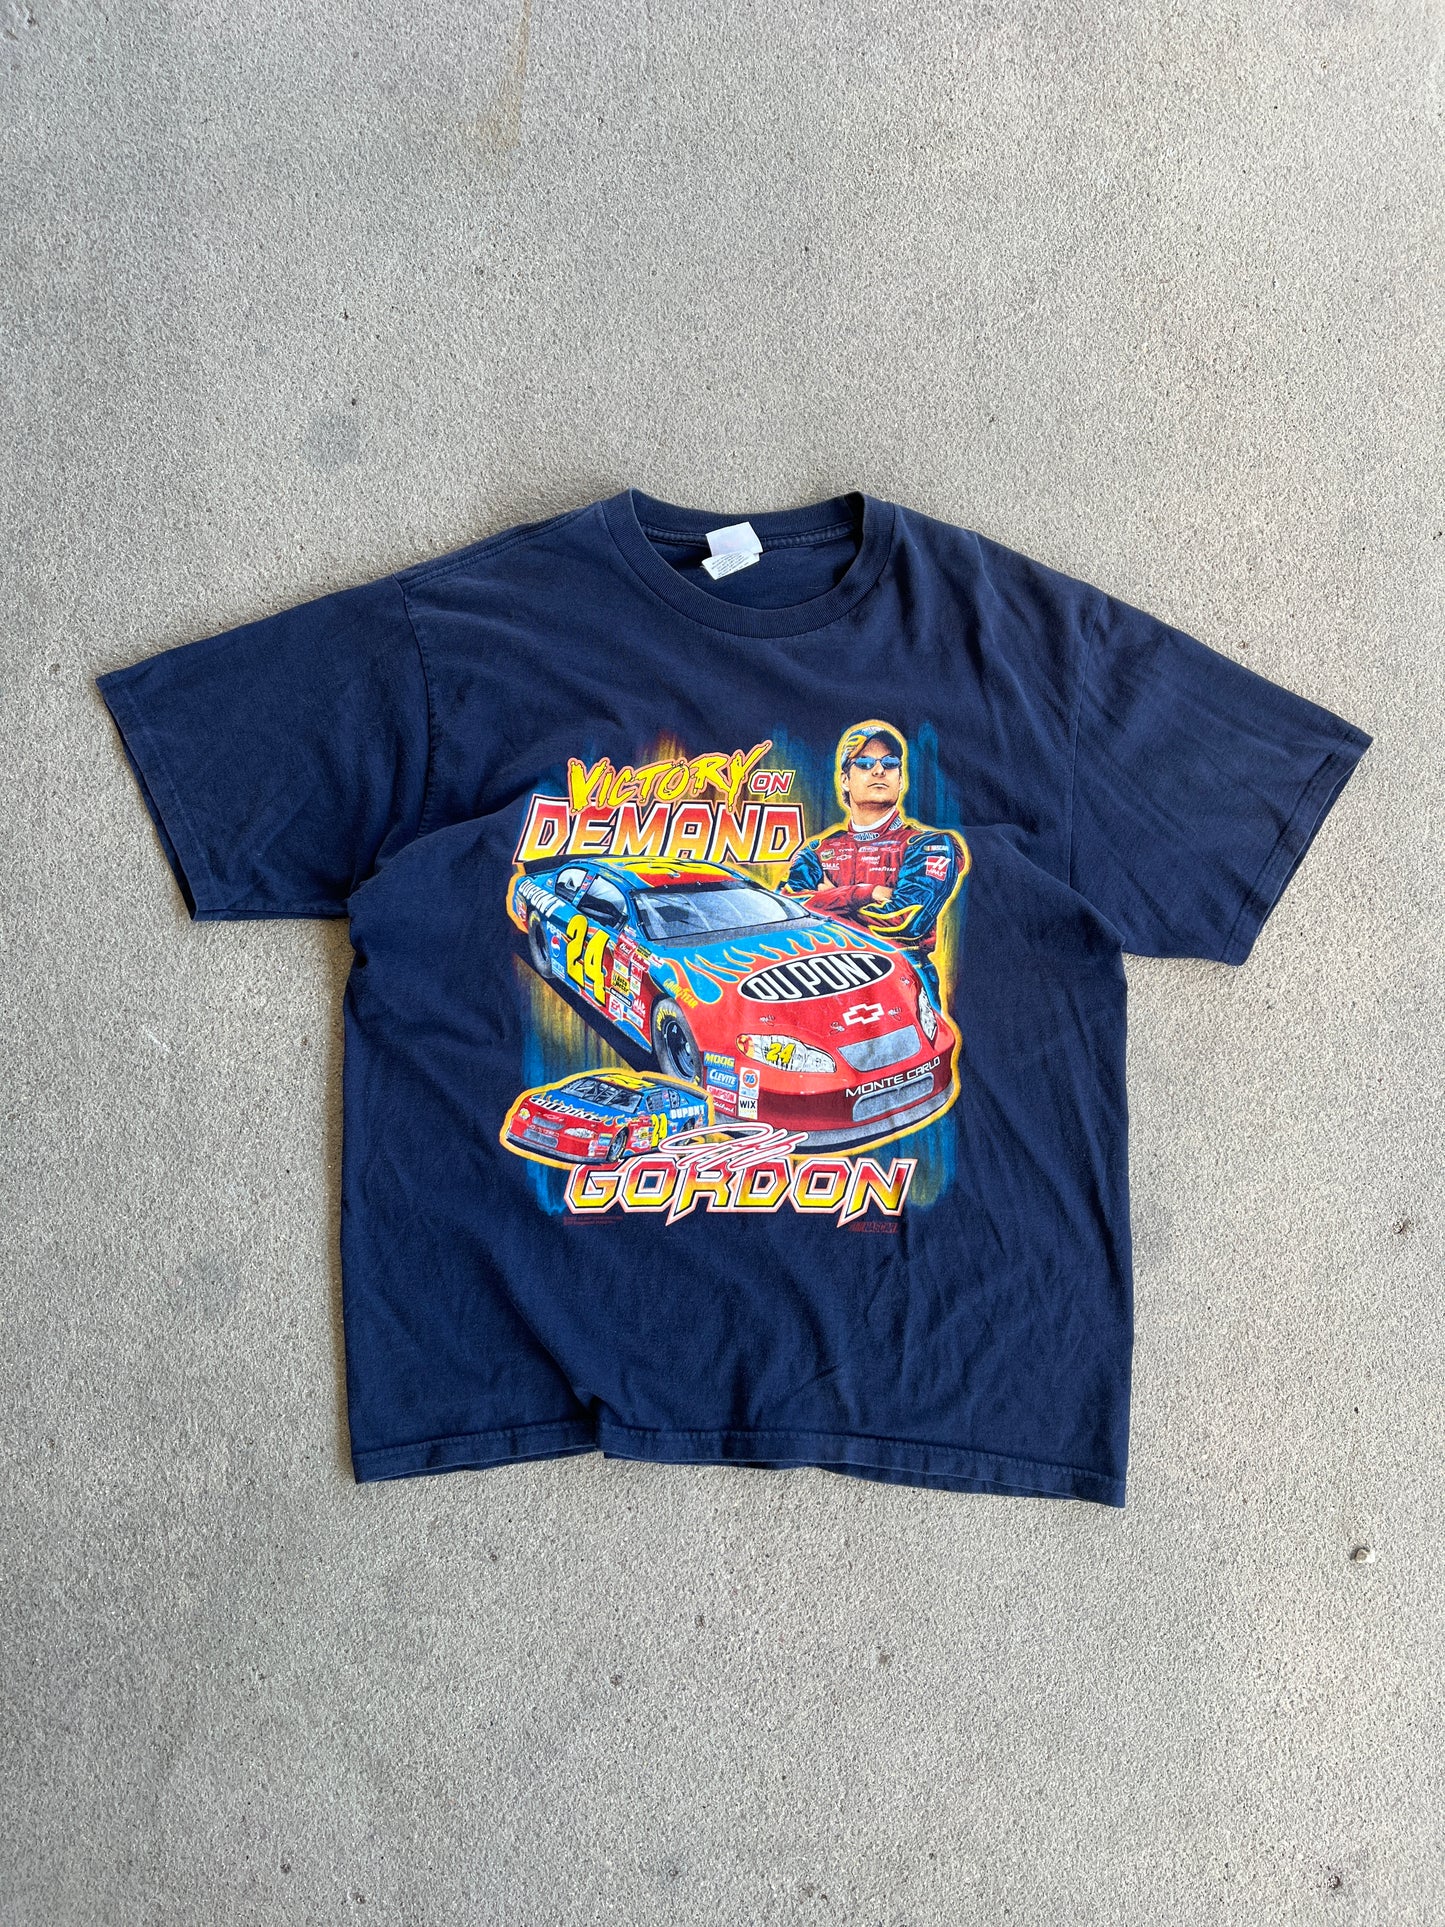 Vintage Jeff Gordon Nascar Shirt - XL